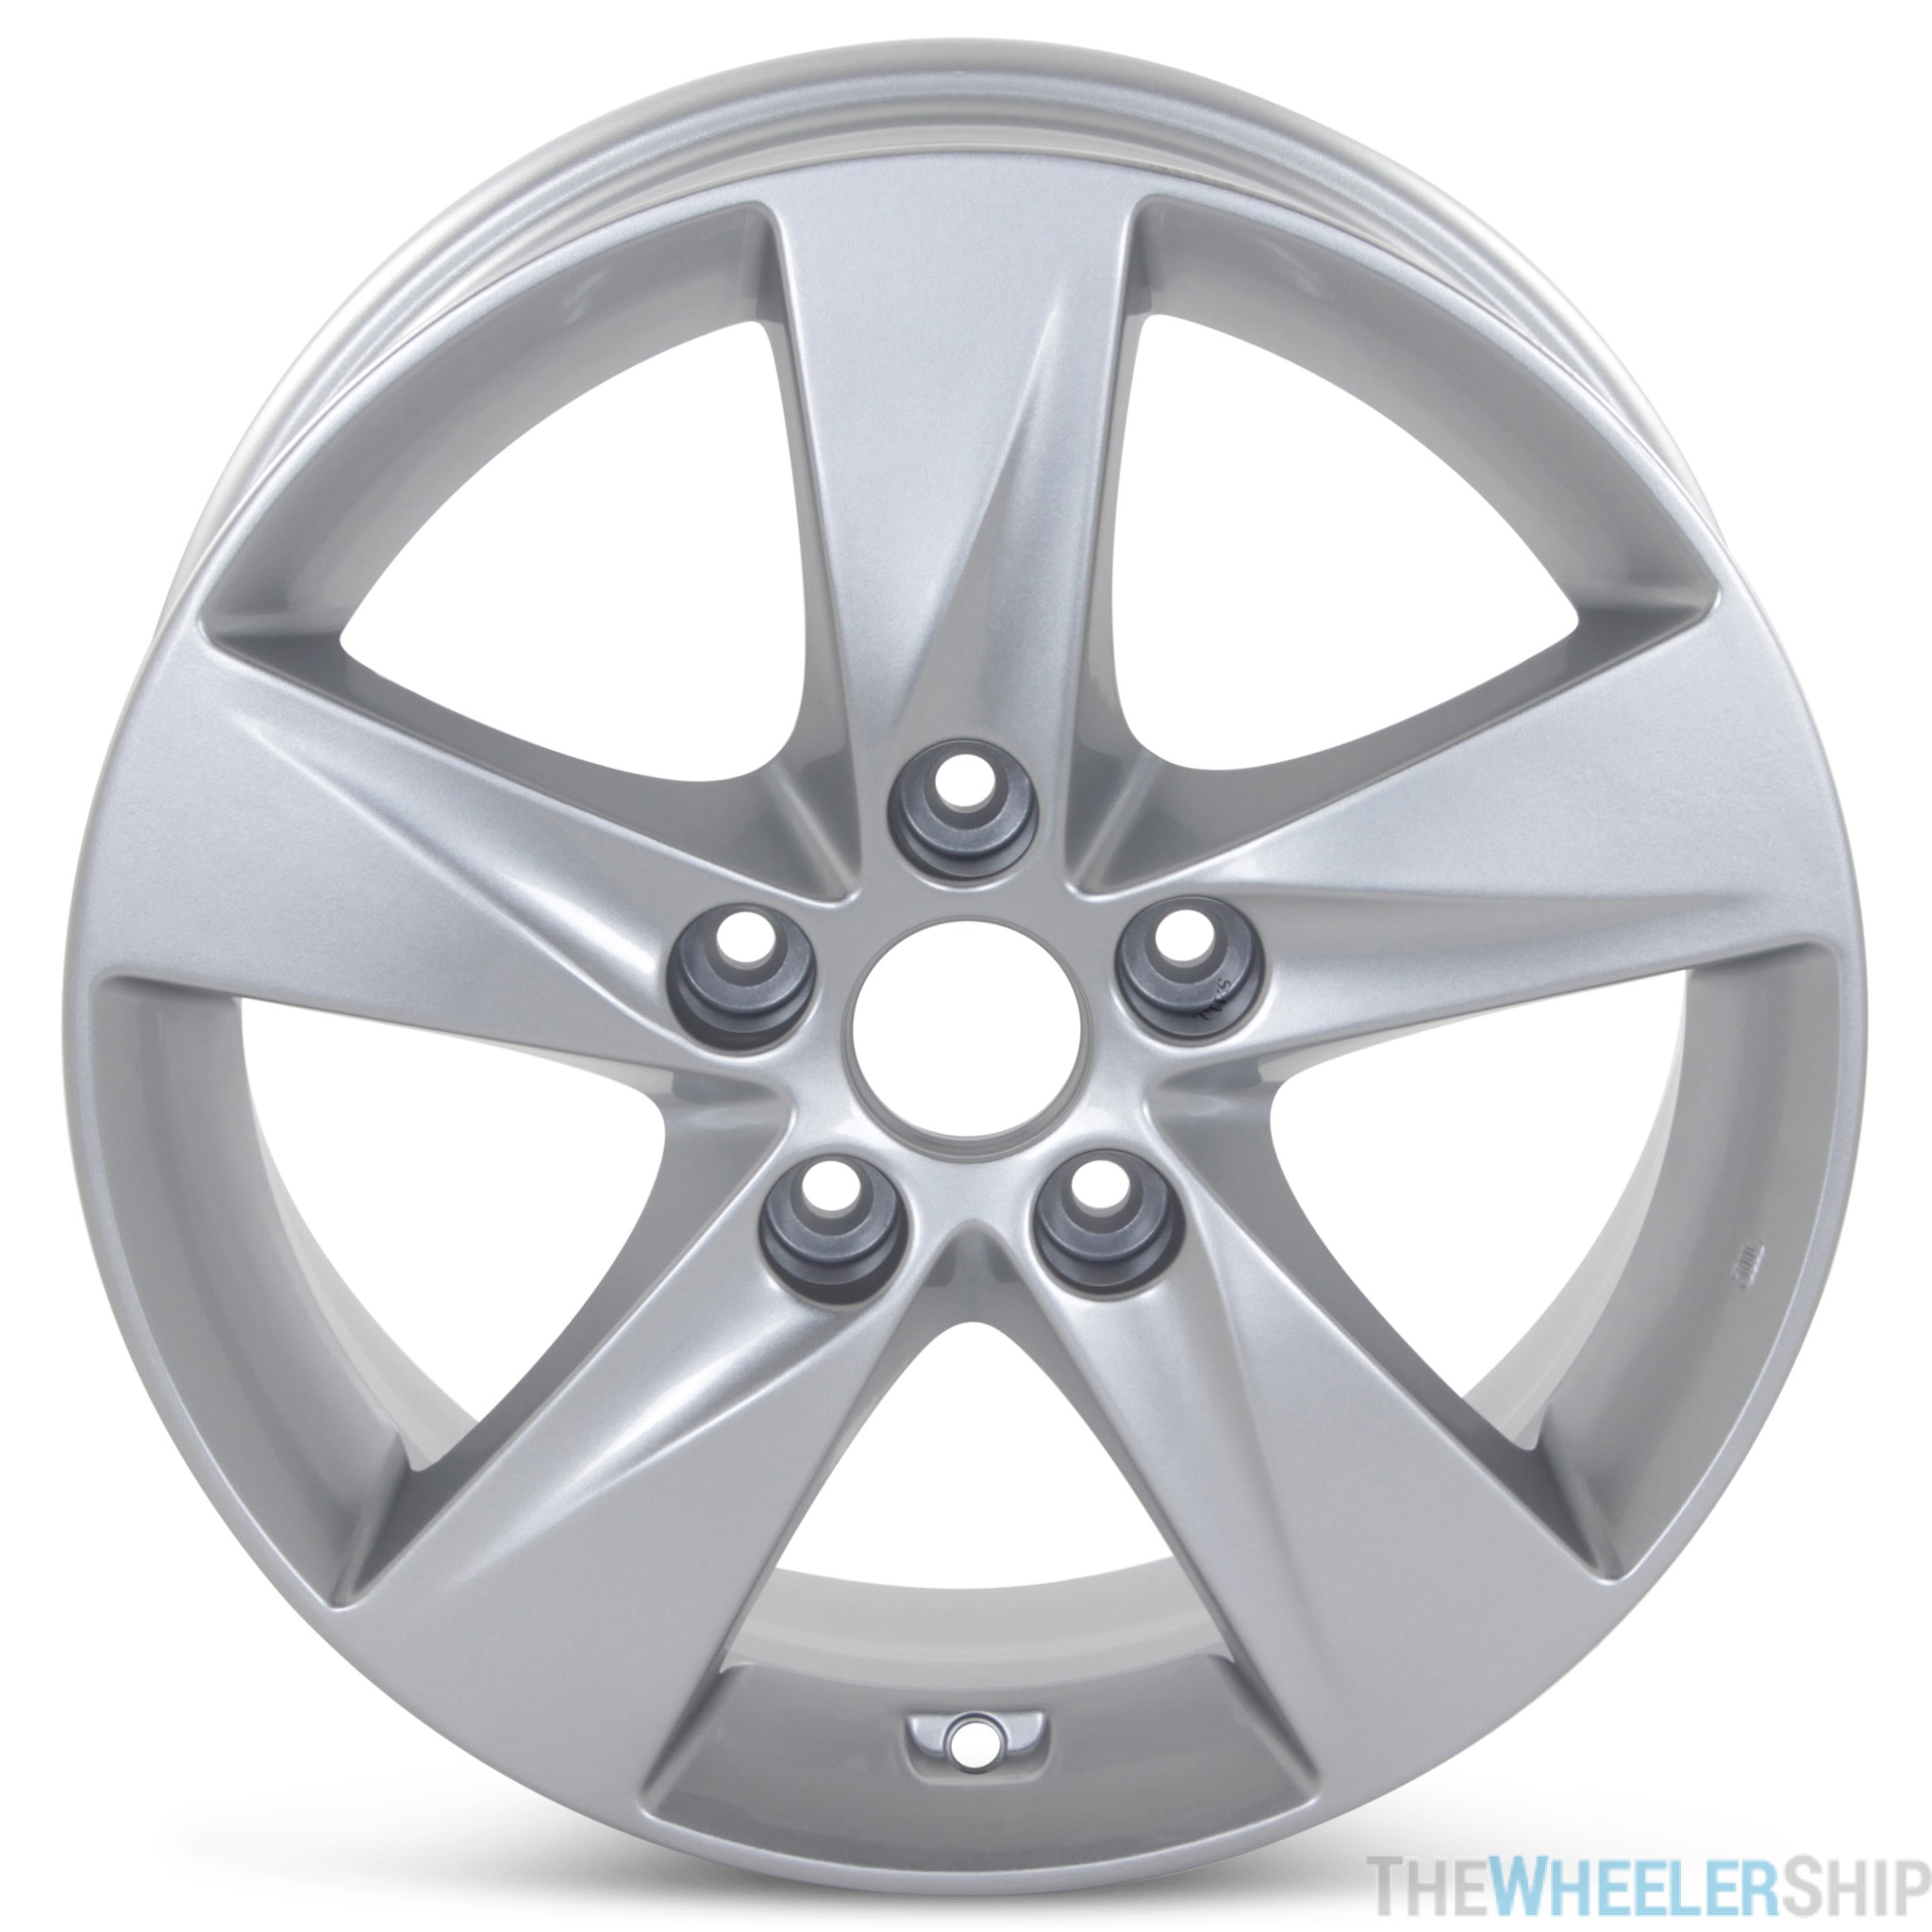 20112013 Hyundai Elantra Wheels for Sale 16" Hyundai Wheels